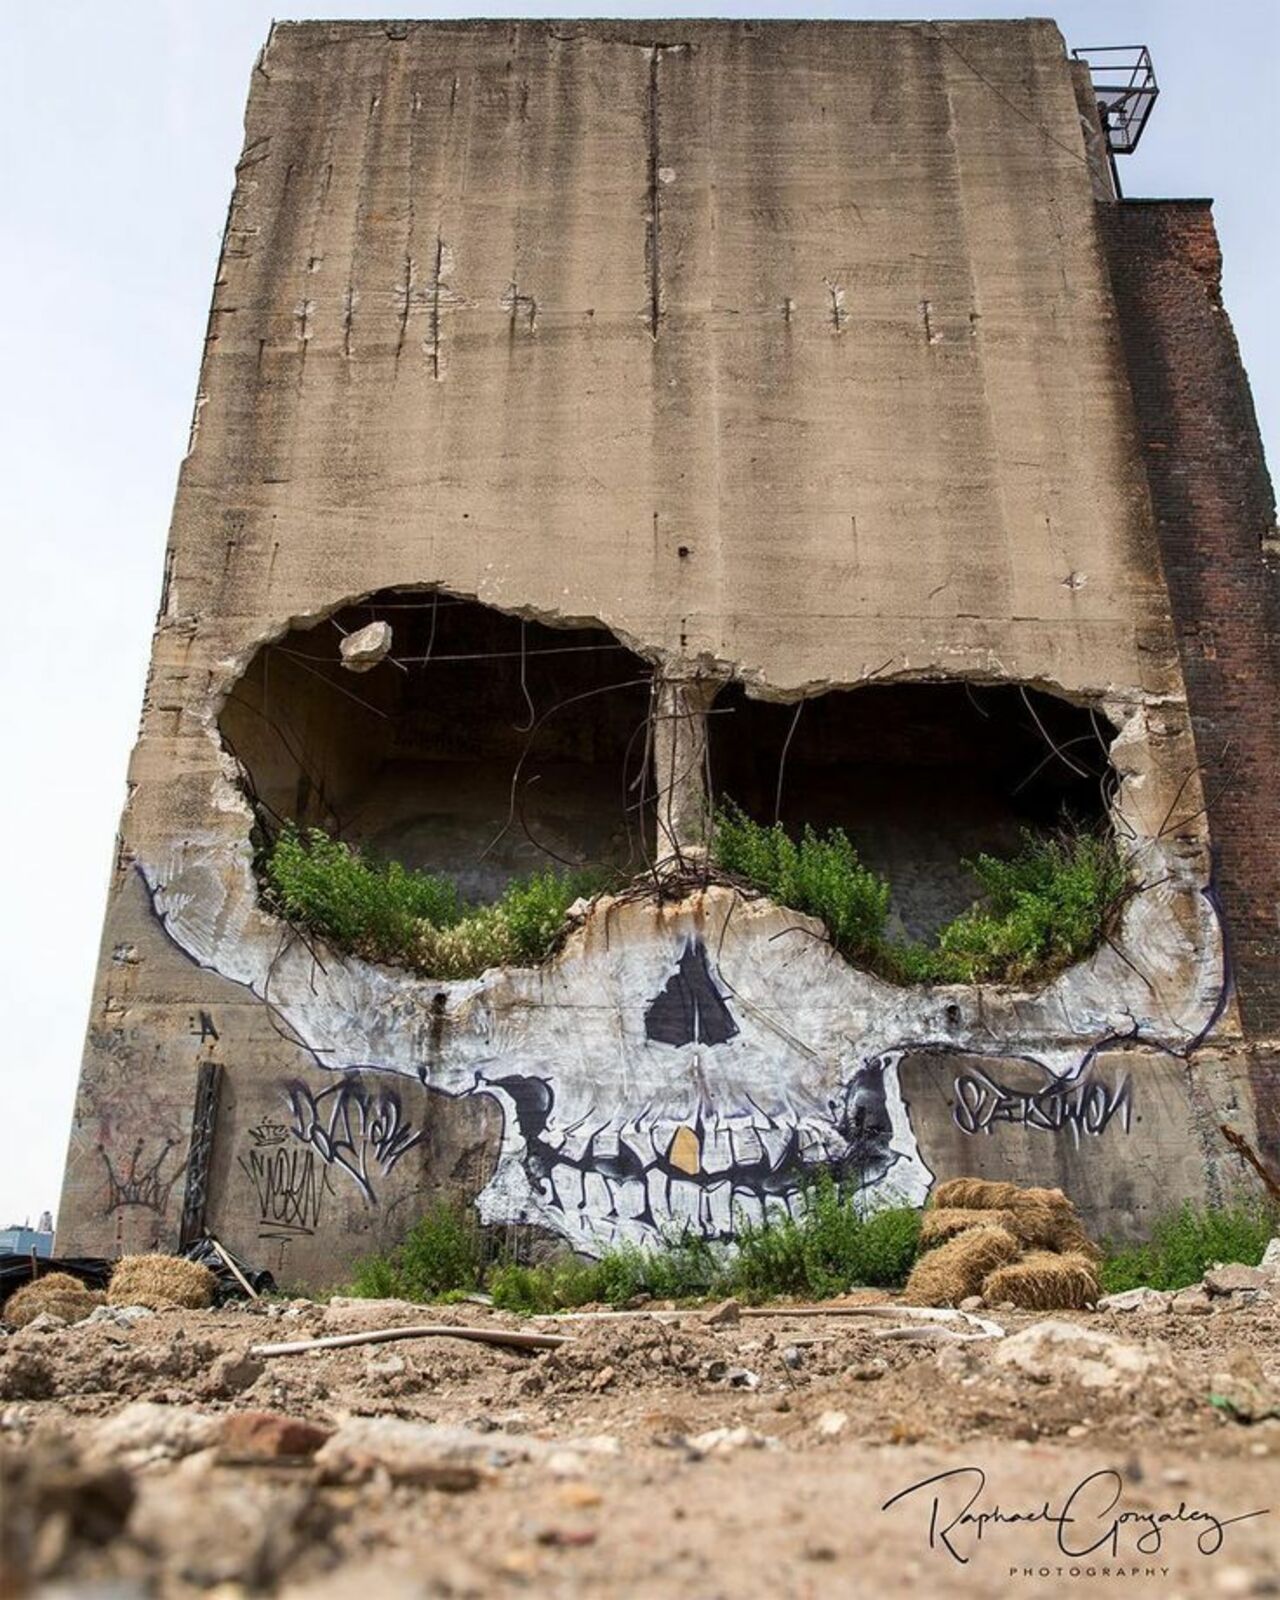 IDK the artist but this is dope af#streetart #mural #graffiti #art https://t.co/ME1dqUBeQR